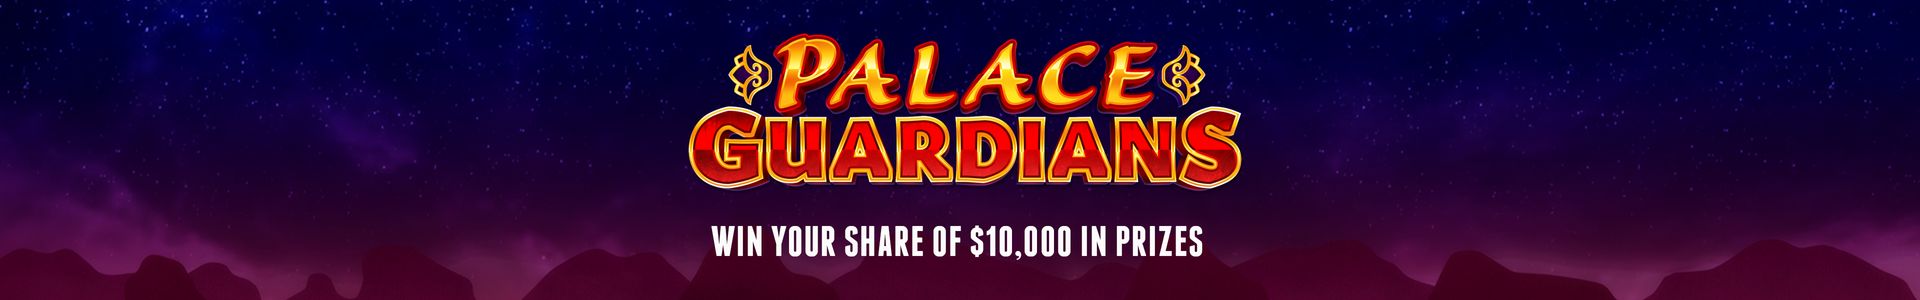 Palace Guardians $10,000